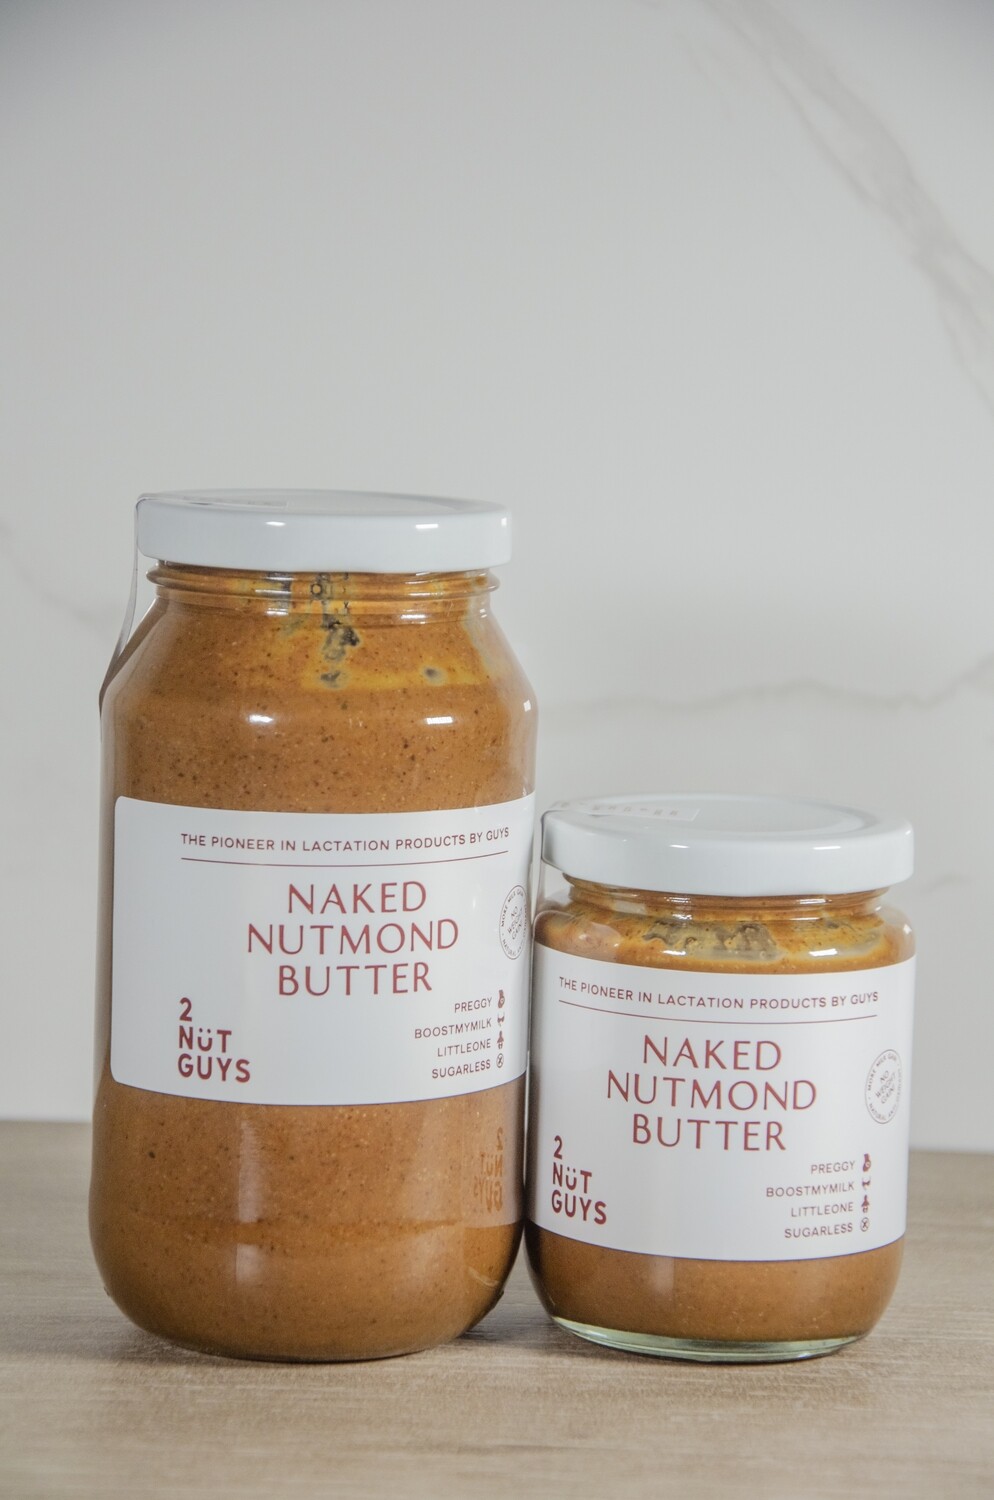 Naked Nutmond Butter